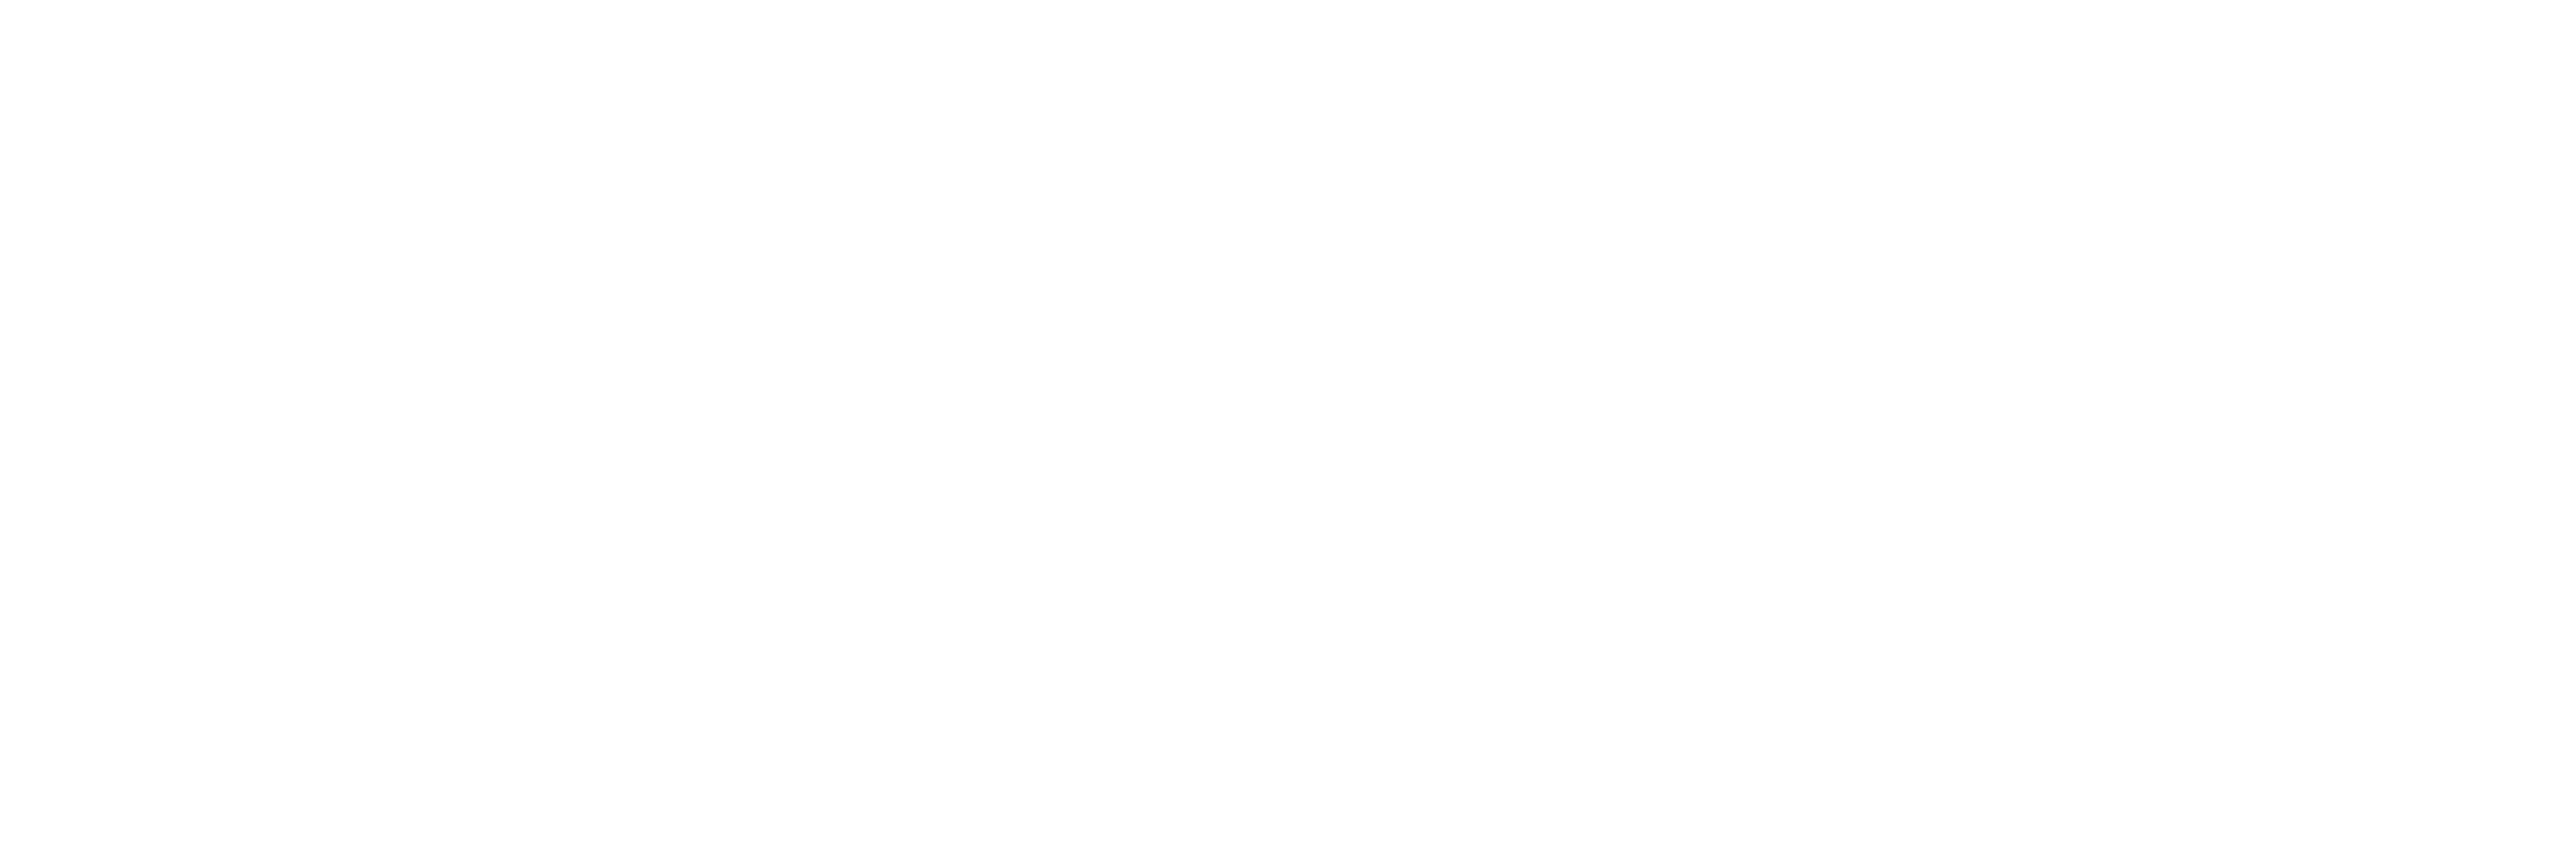 Medvista Healthcare INC